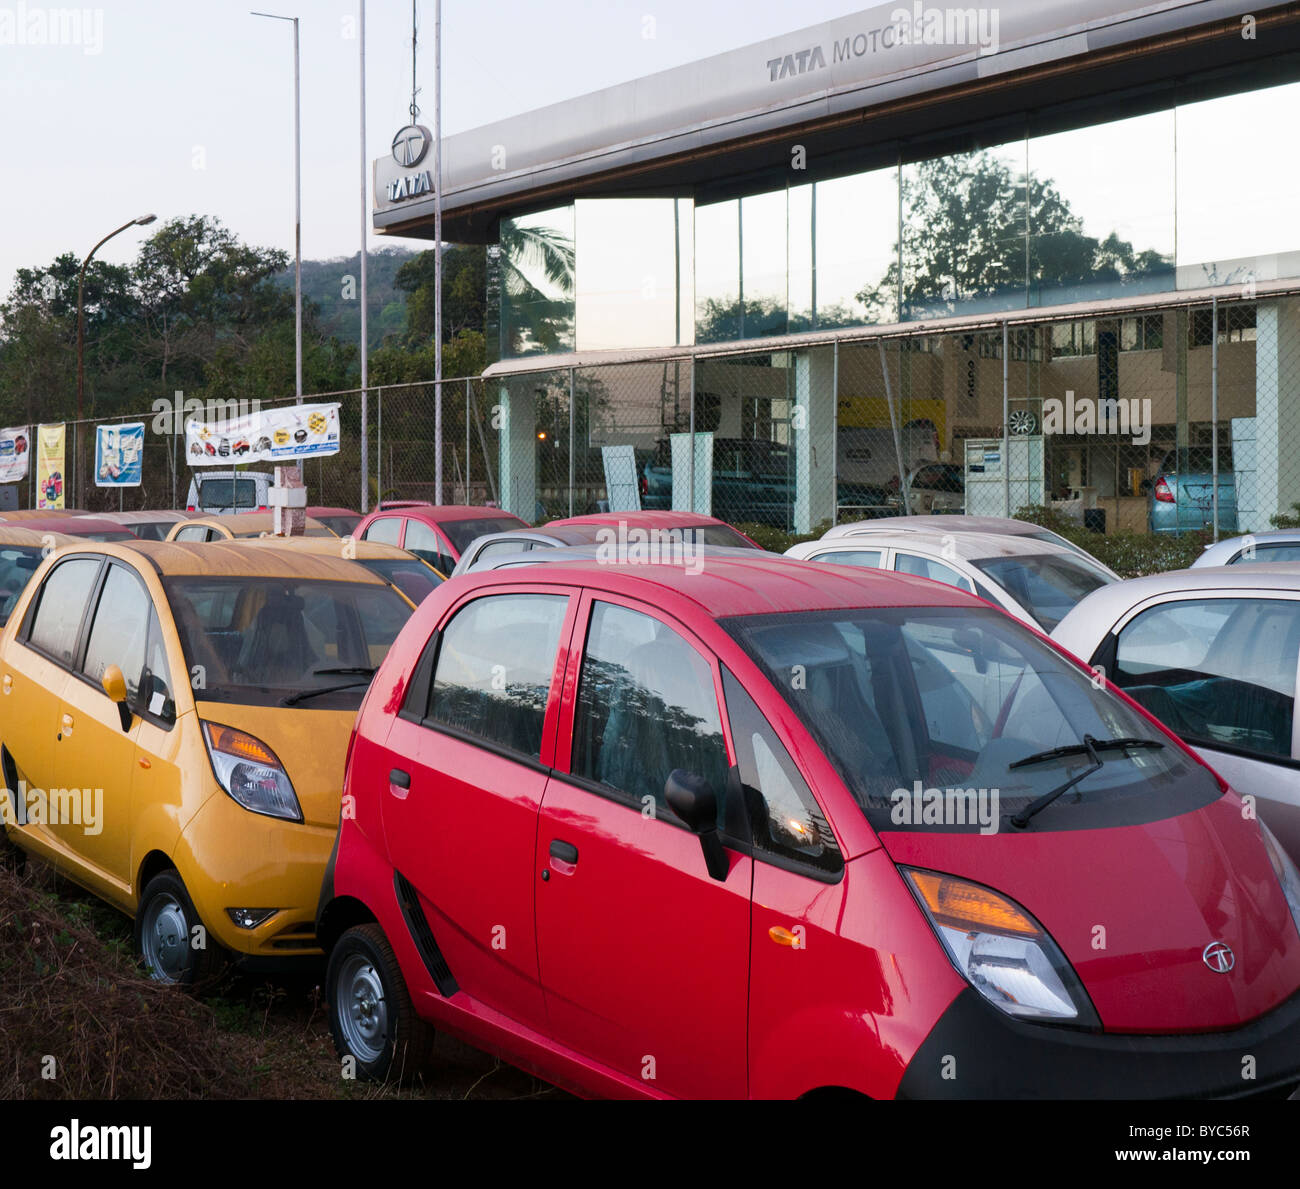 Tata Nano cars at a Tata Motors car showroom in India Stock Photo